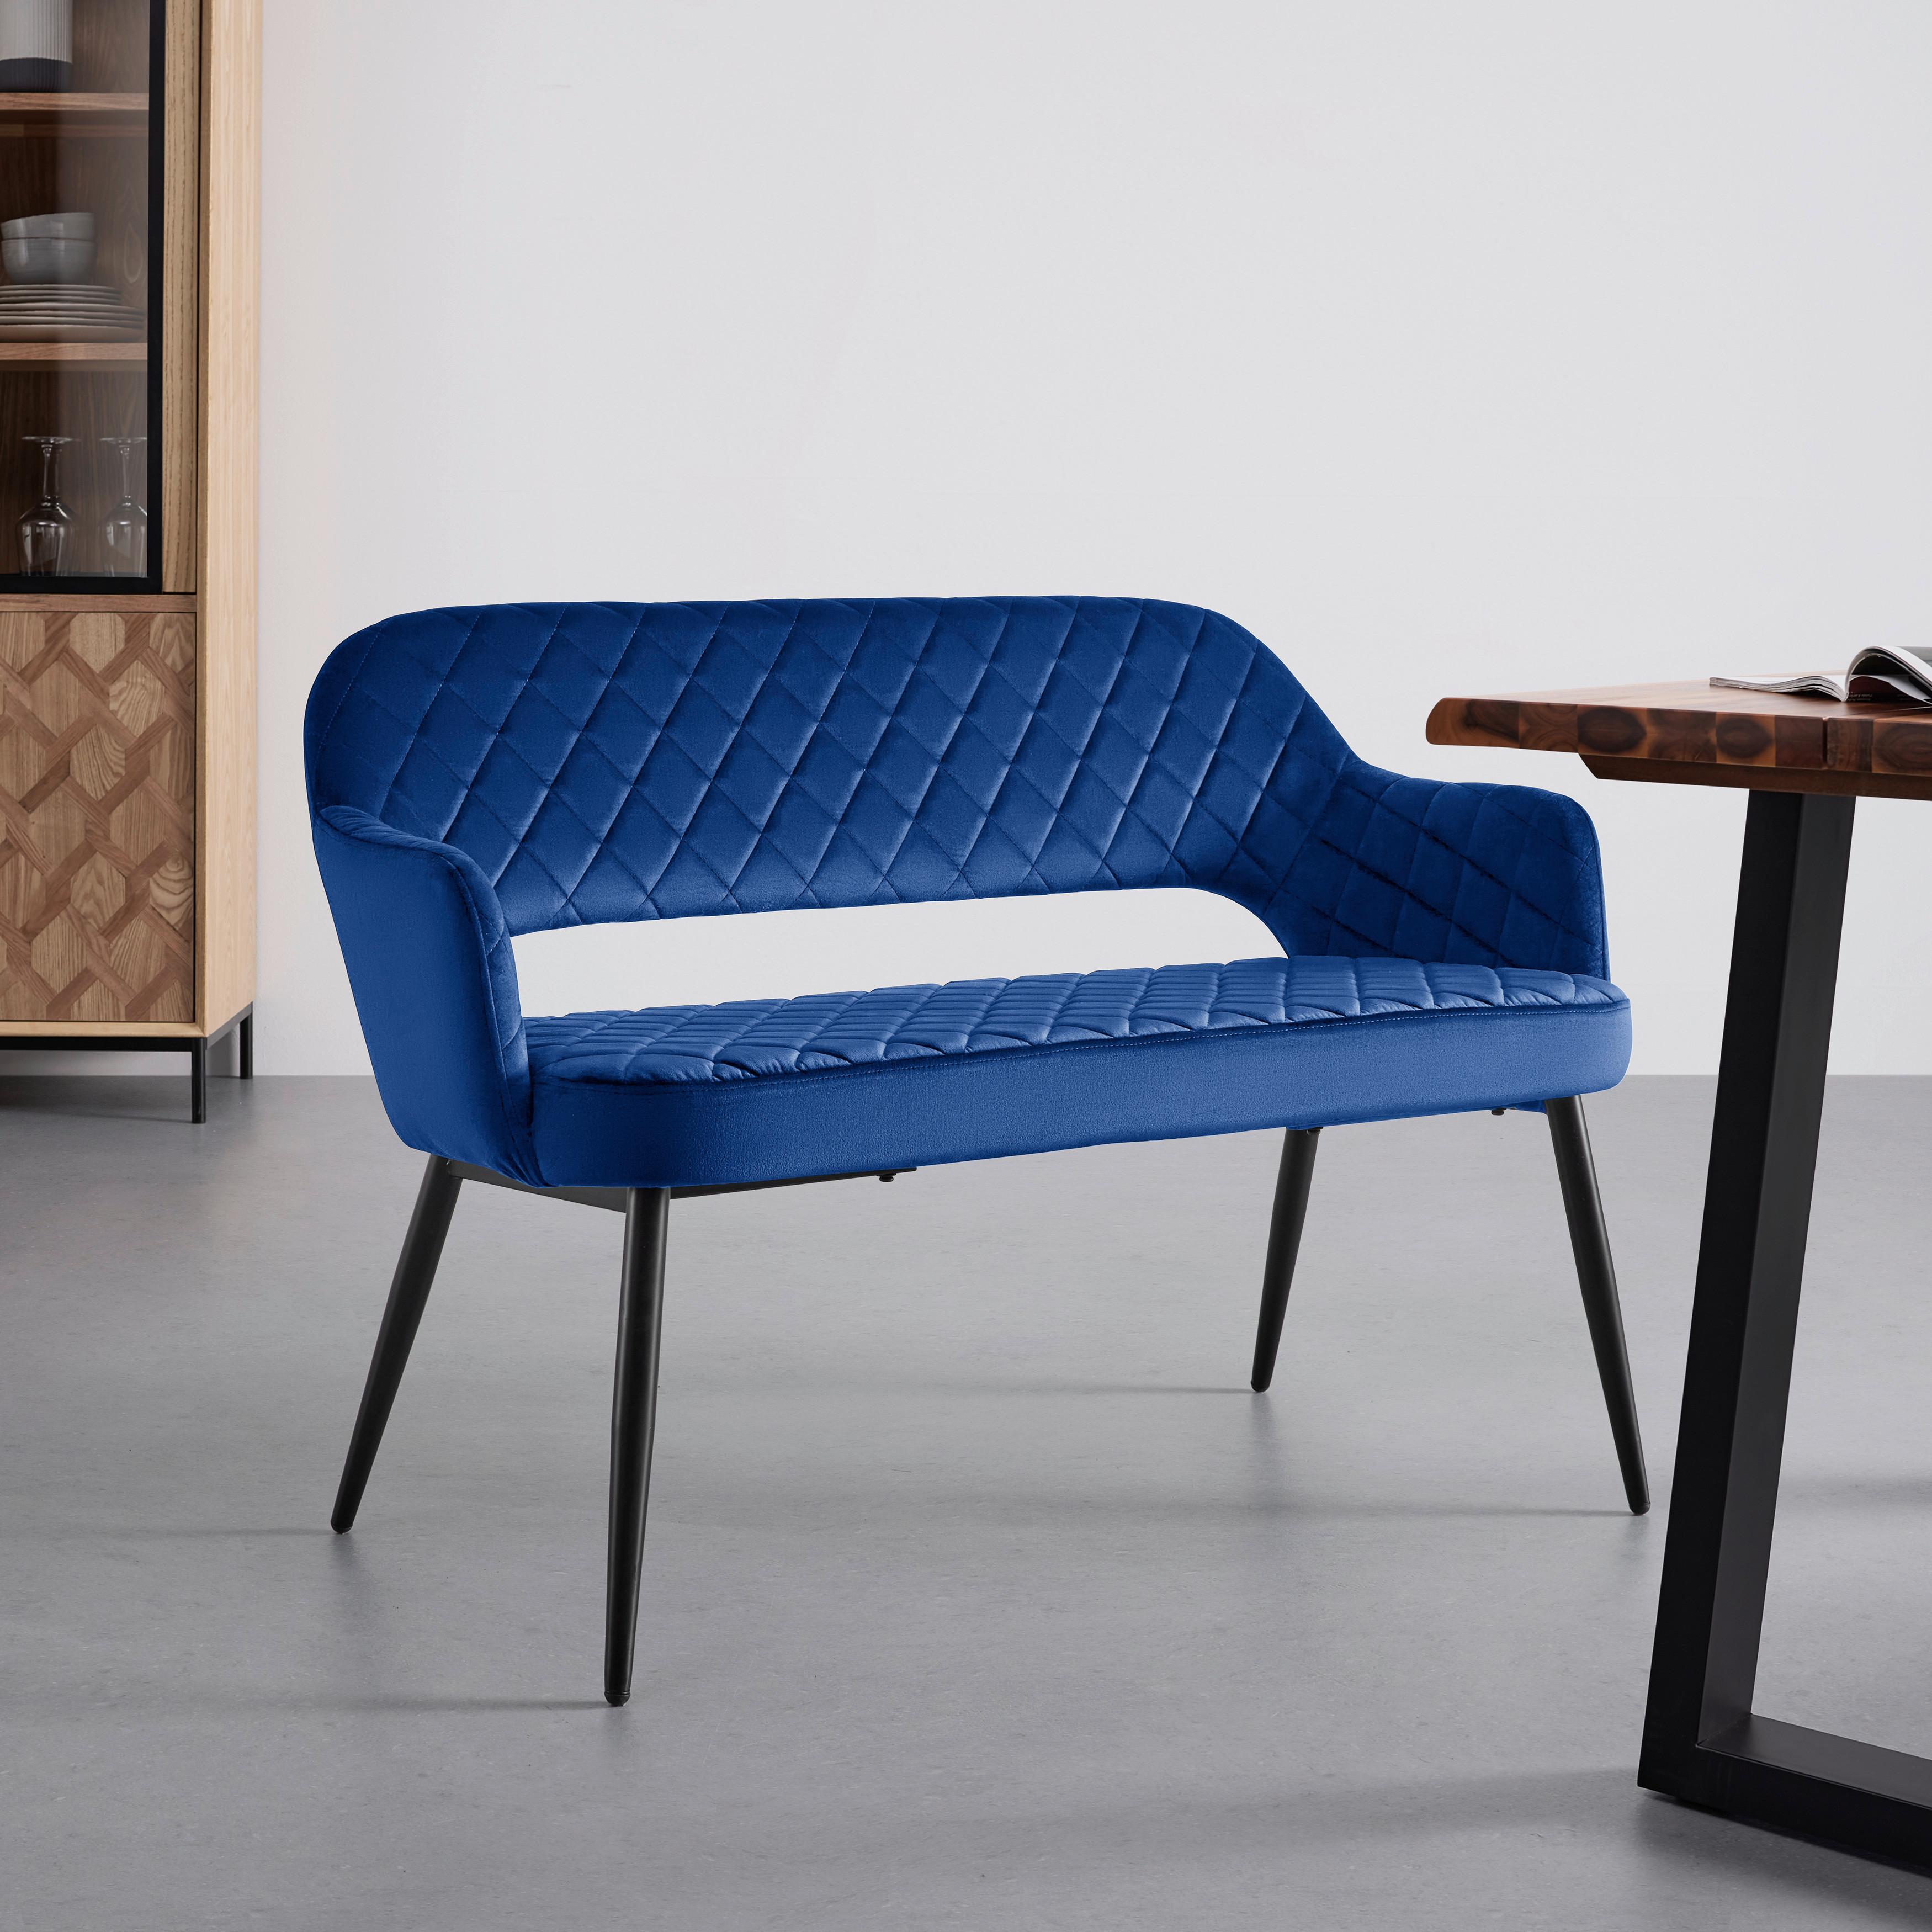 Sitzbank blau, "Isabella", Samt - Blau/Schwarz, MODERN, Holz/Textil (112/78/62cm) - Bessagi Home